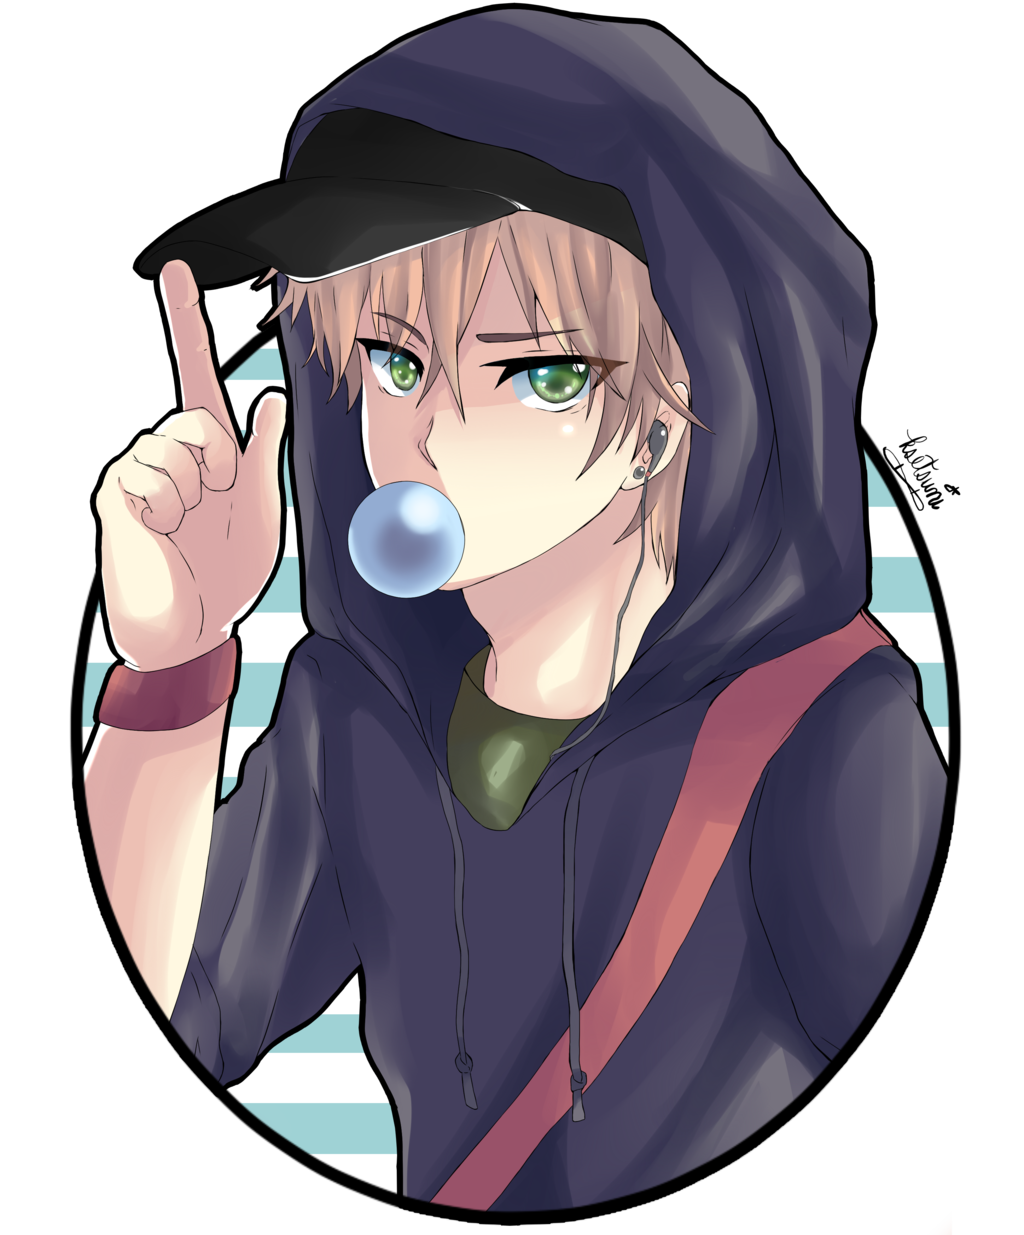 Anime Boy Transparent Image PNG Image